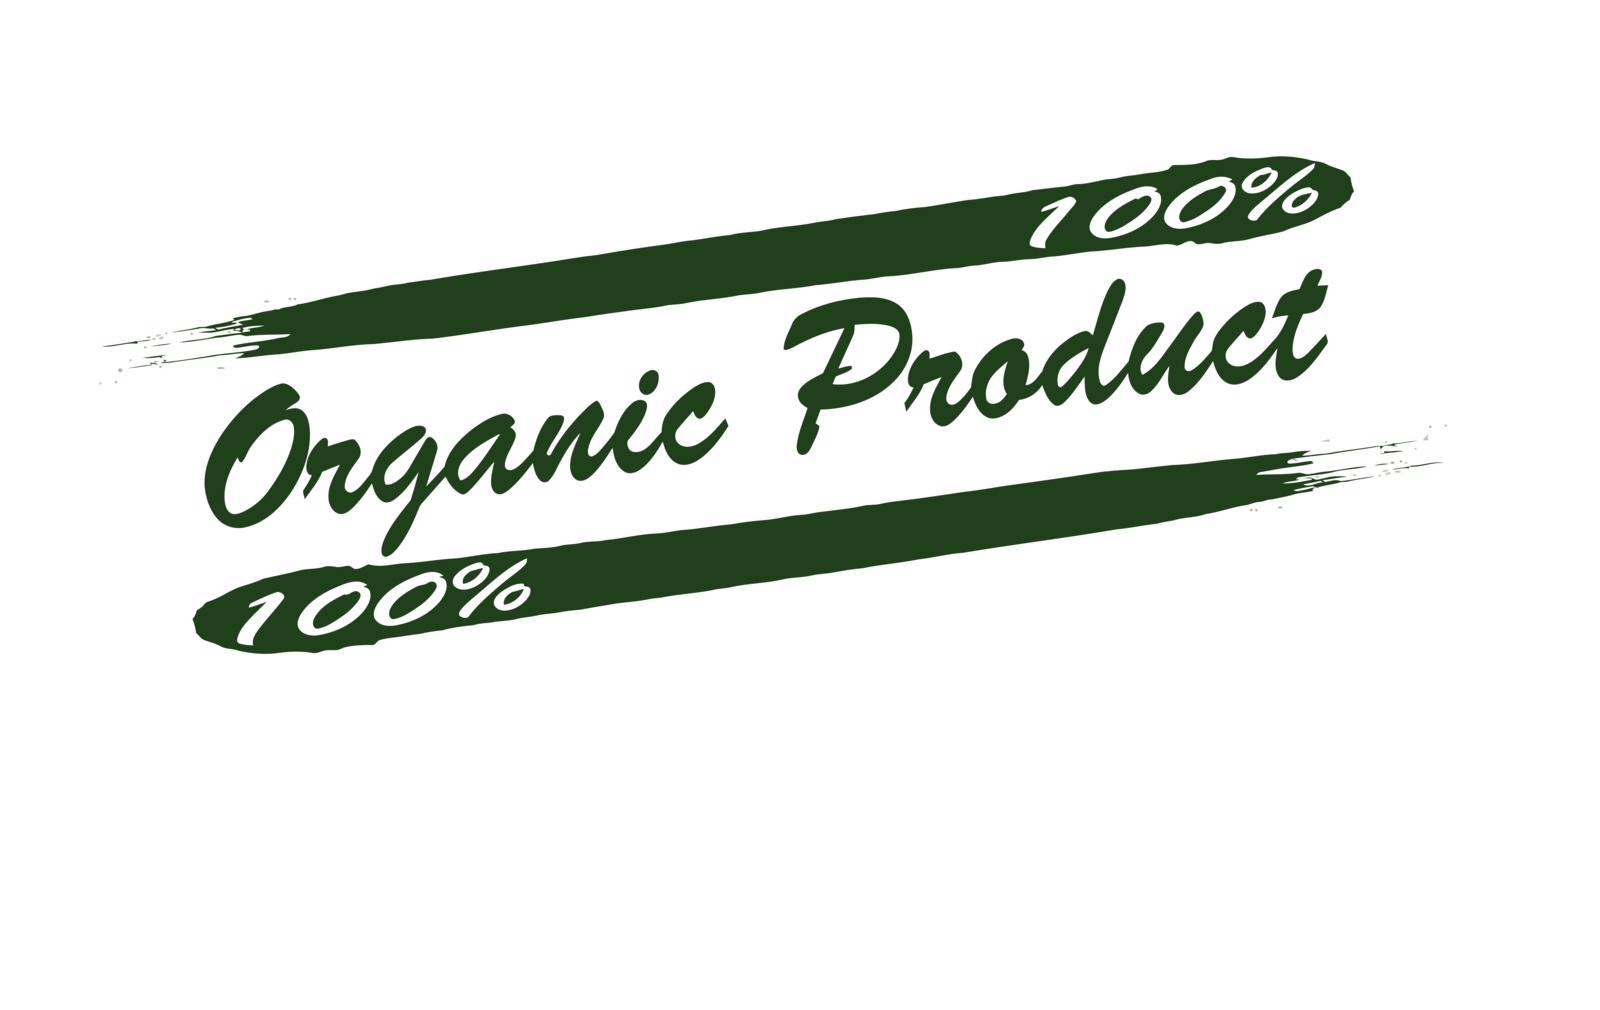 Organic product by carmenbobo